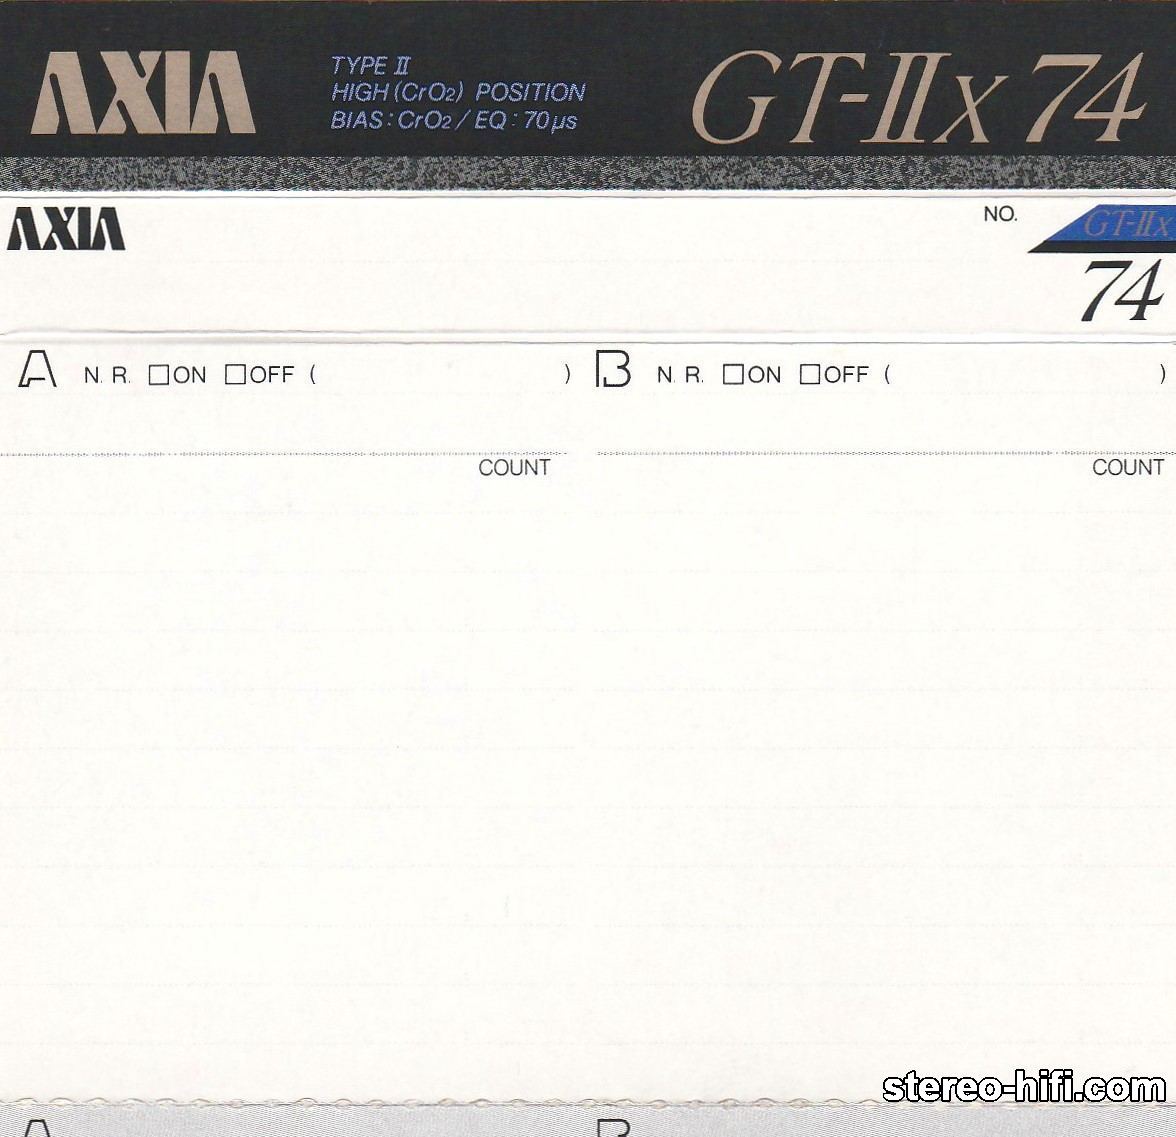 AXIA GT-IIx C74 1989 JP